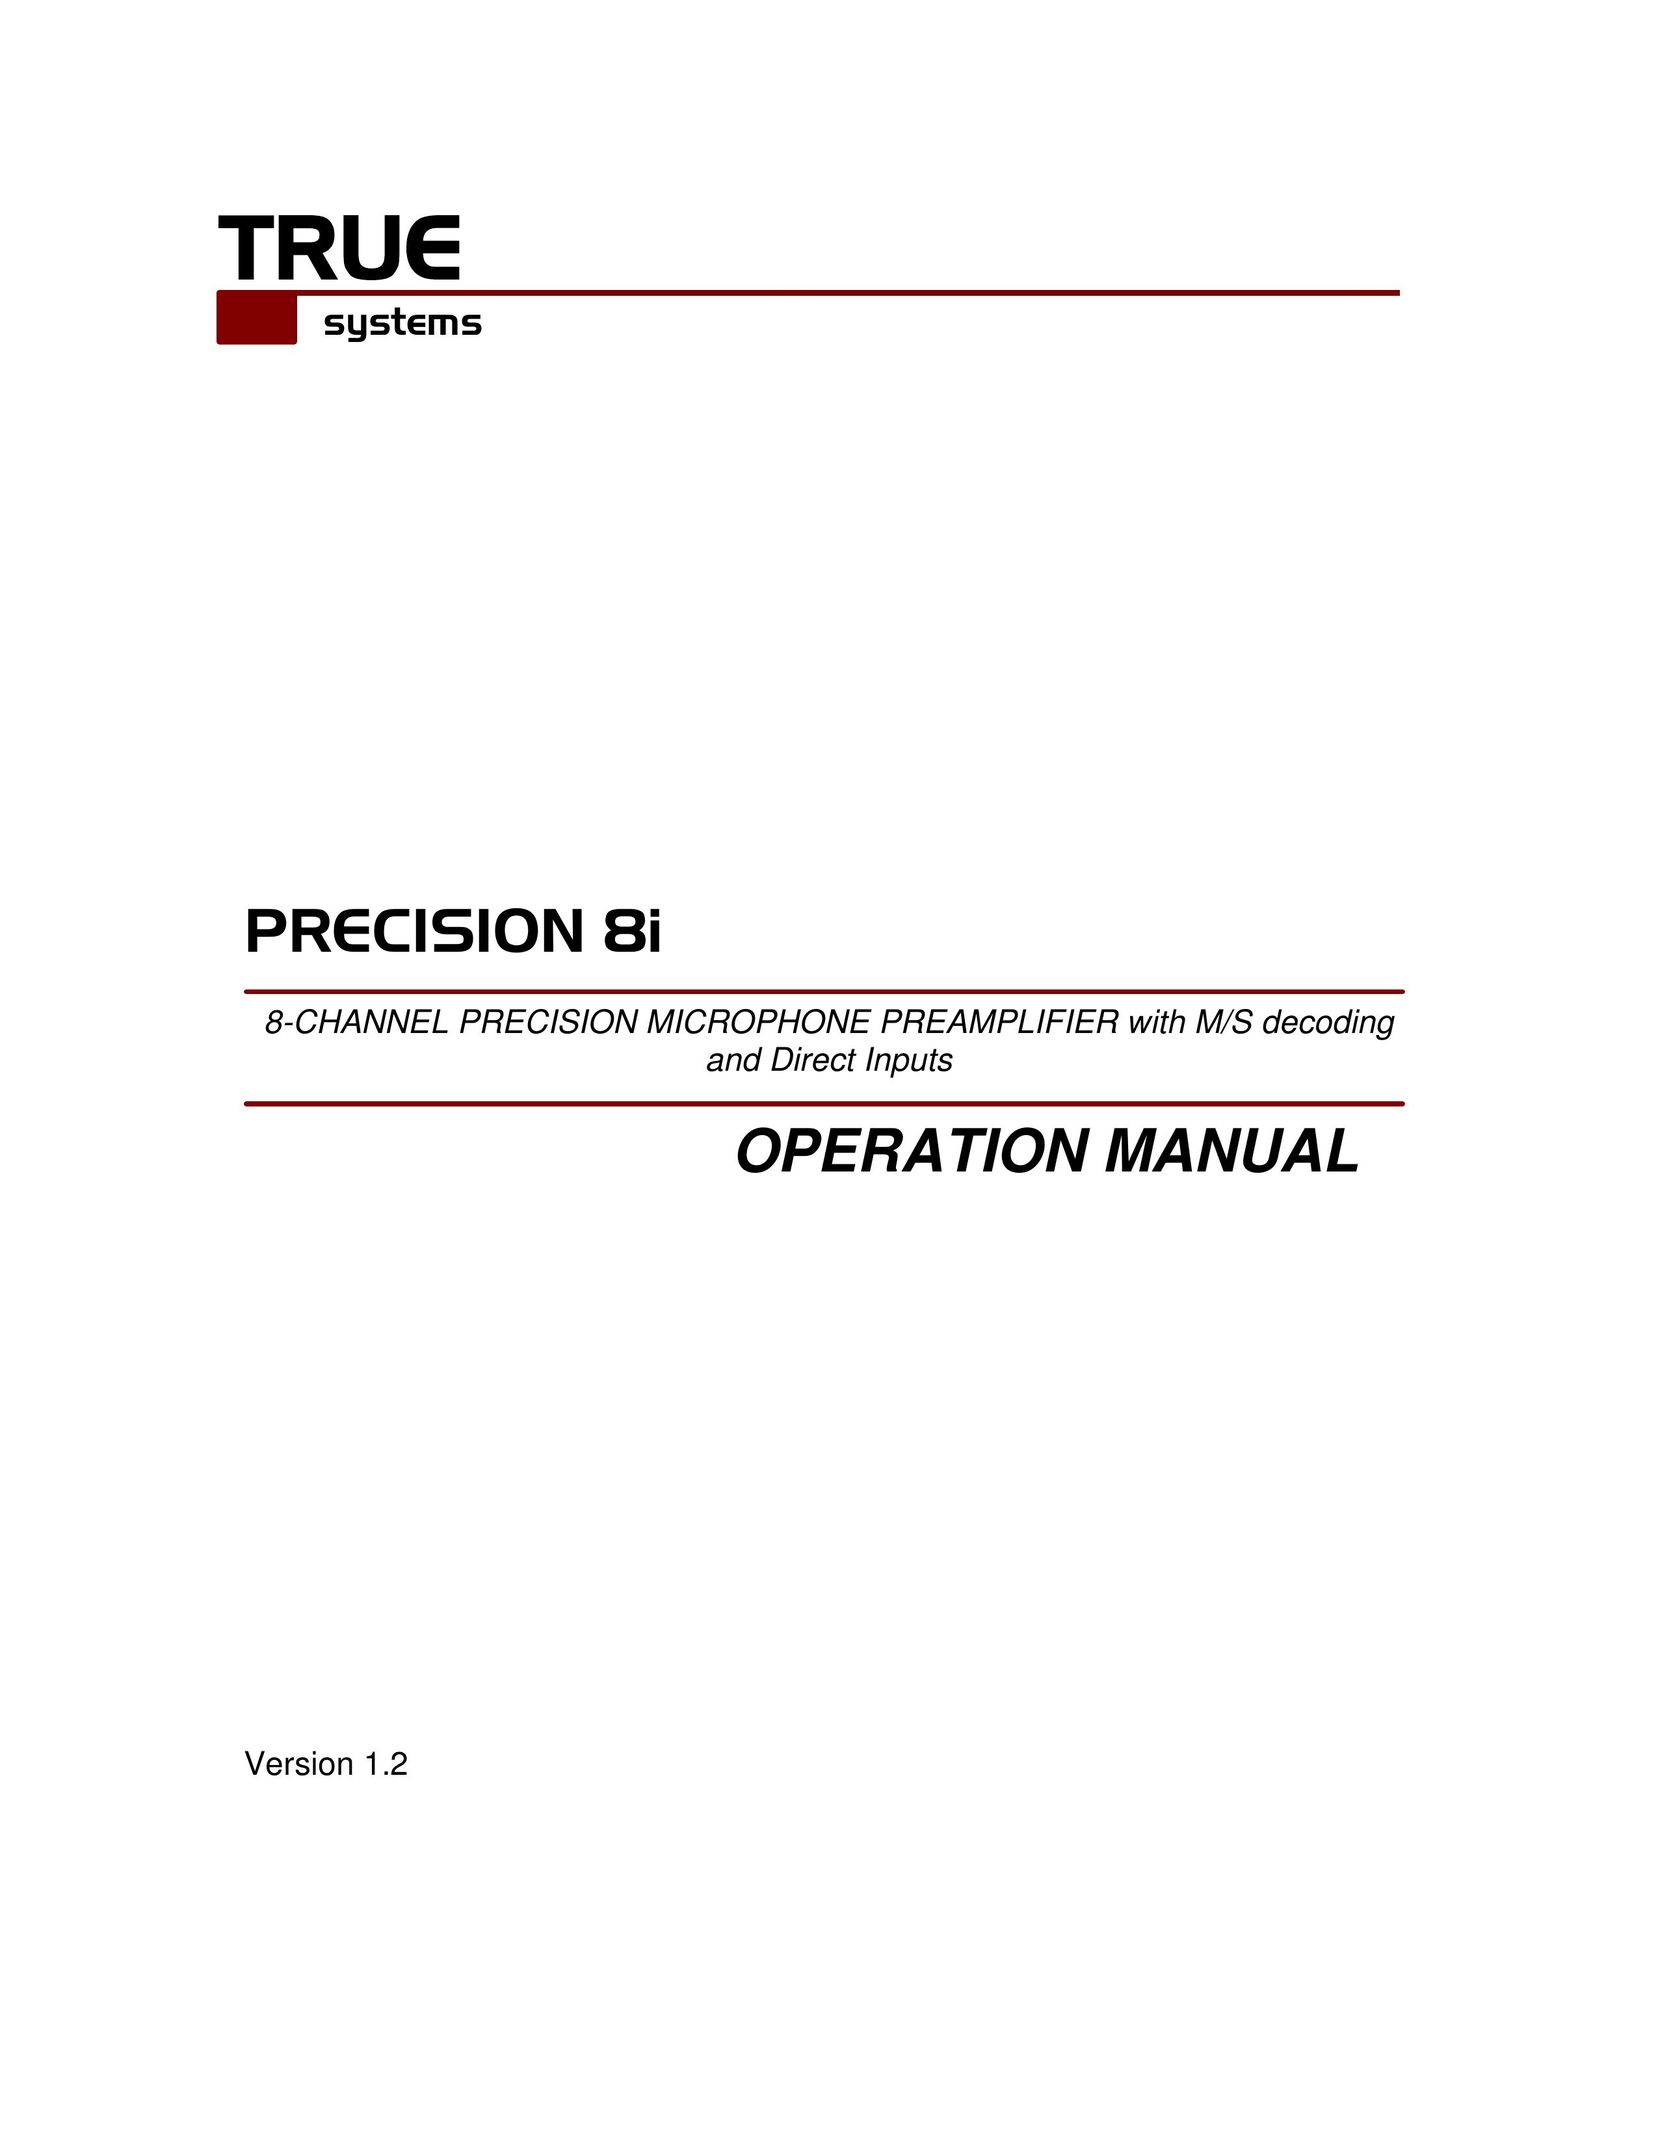 True Manufacturing Company PRECISION 8i Stereo Amplifier User Manual